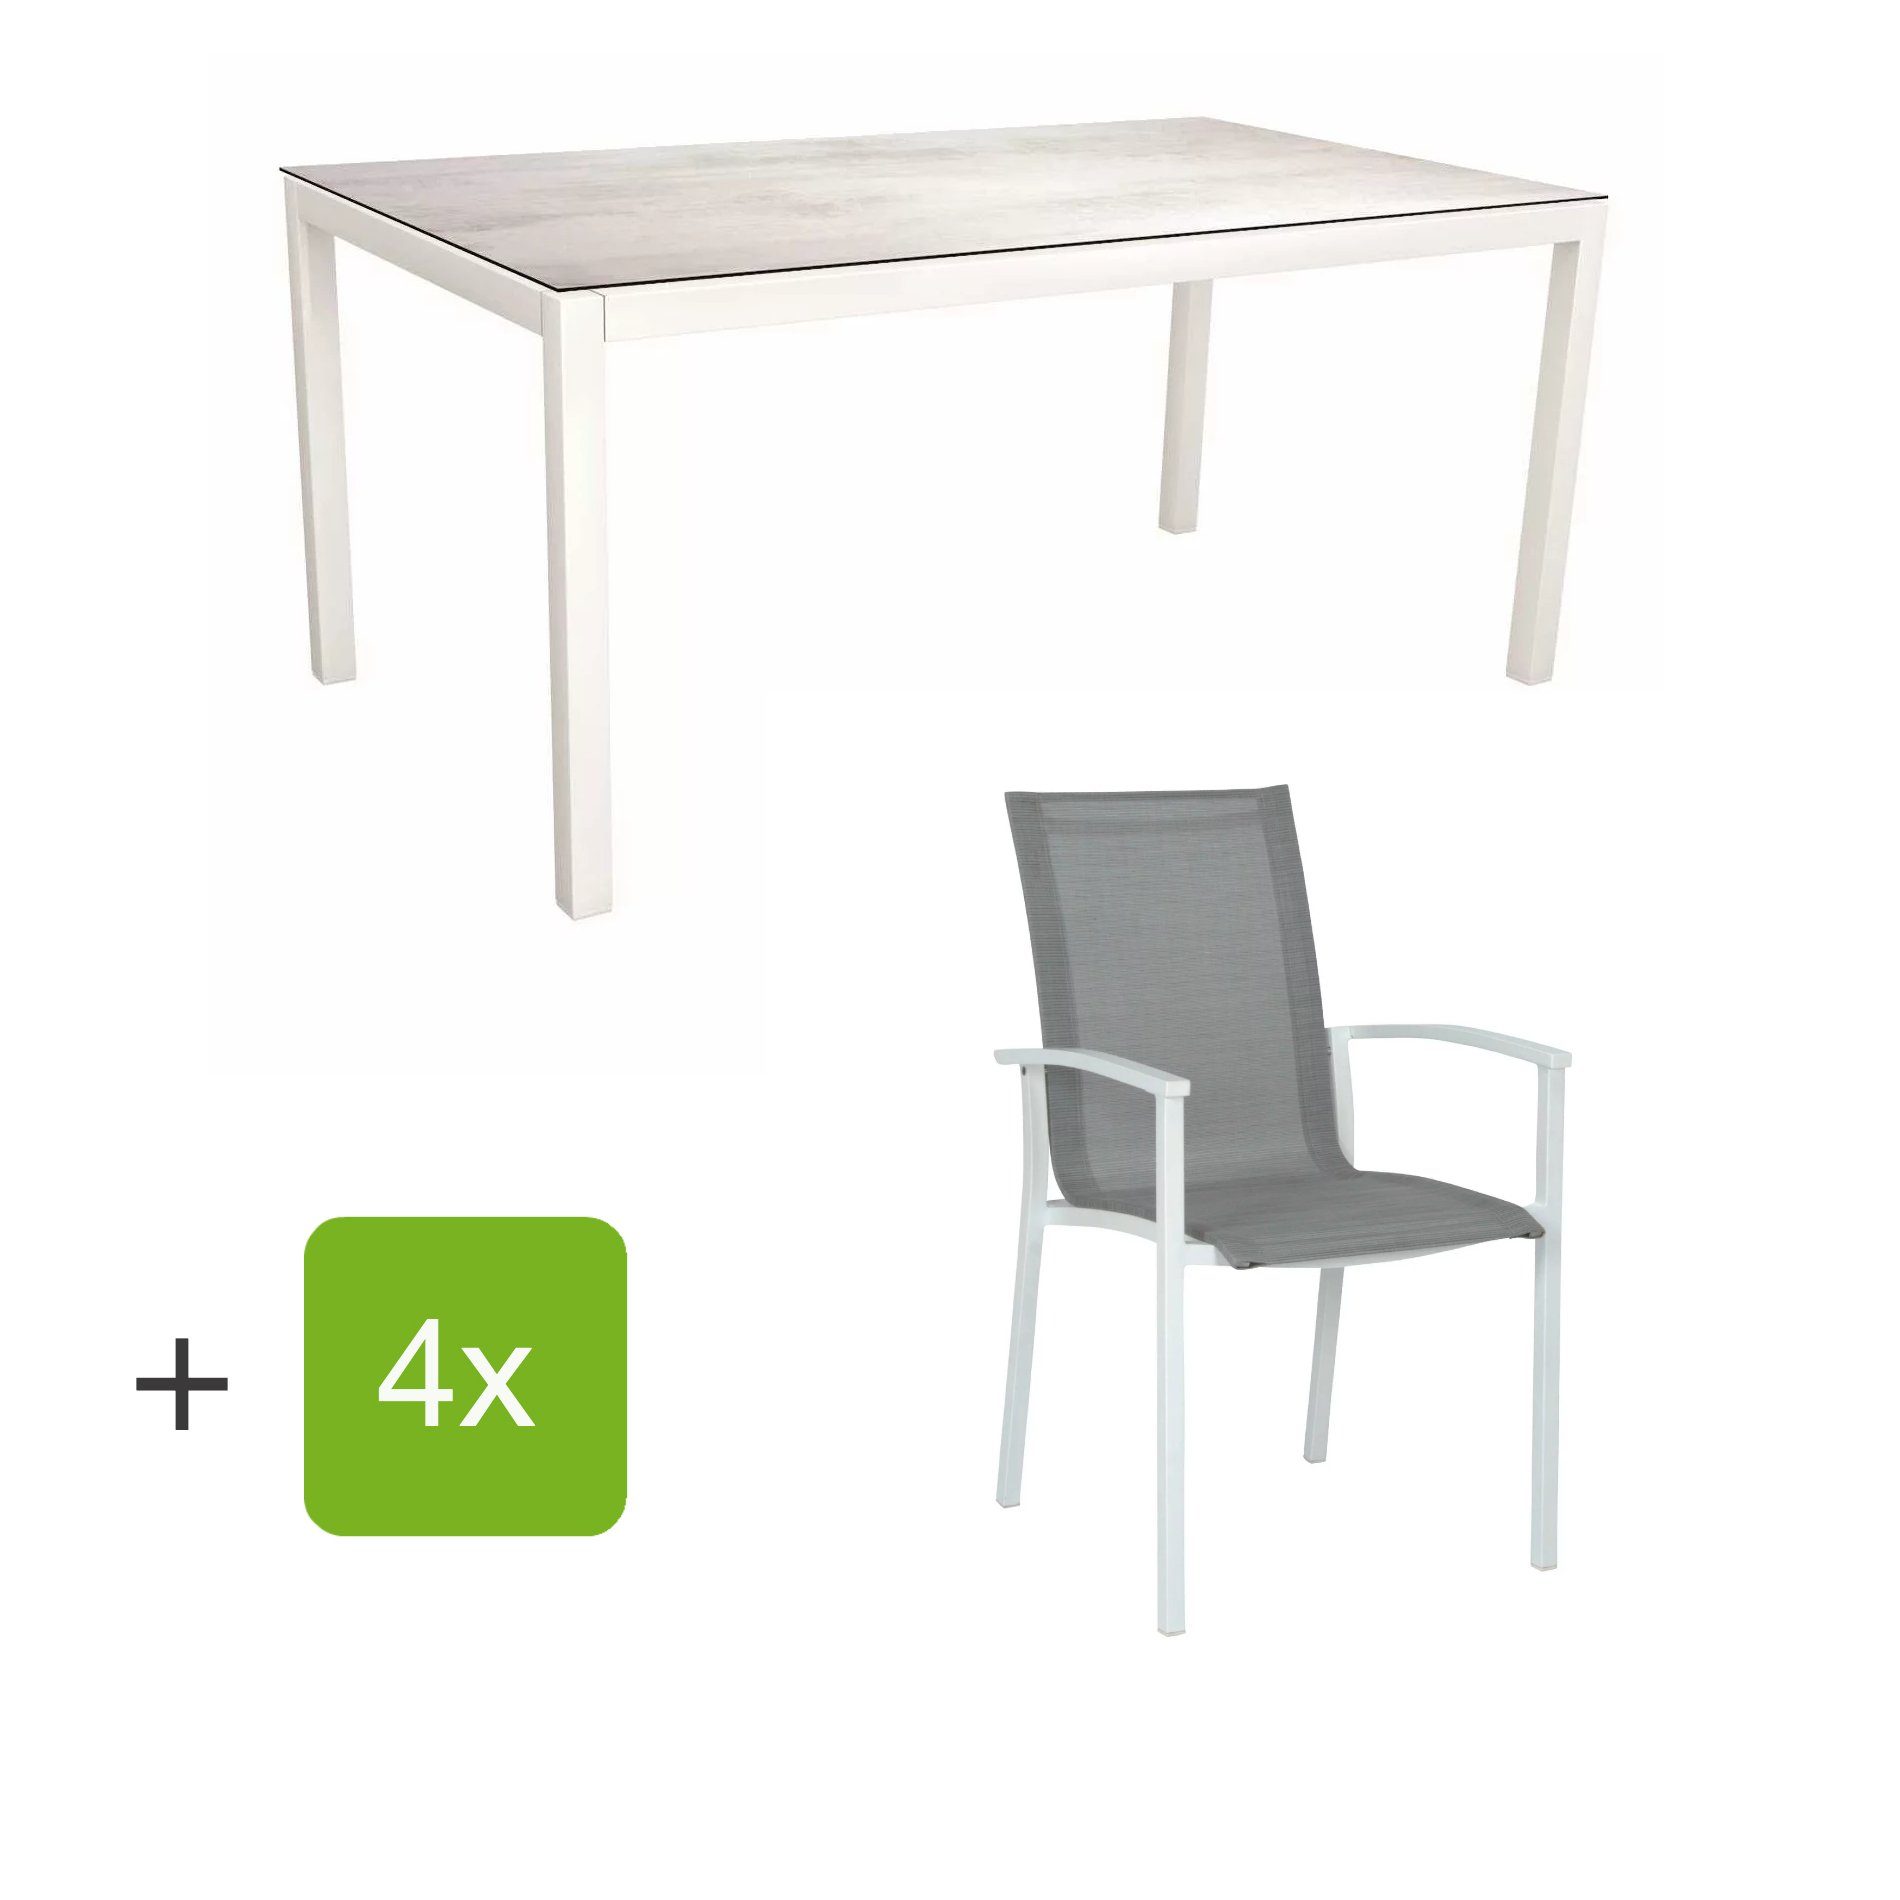 Stern Gartenmöbel-Set "Evoee", Gestelle Aluminium weiß, Sitzfläche Textilgewebe silberfarben, Tischplatte HPL Zement hell